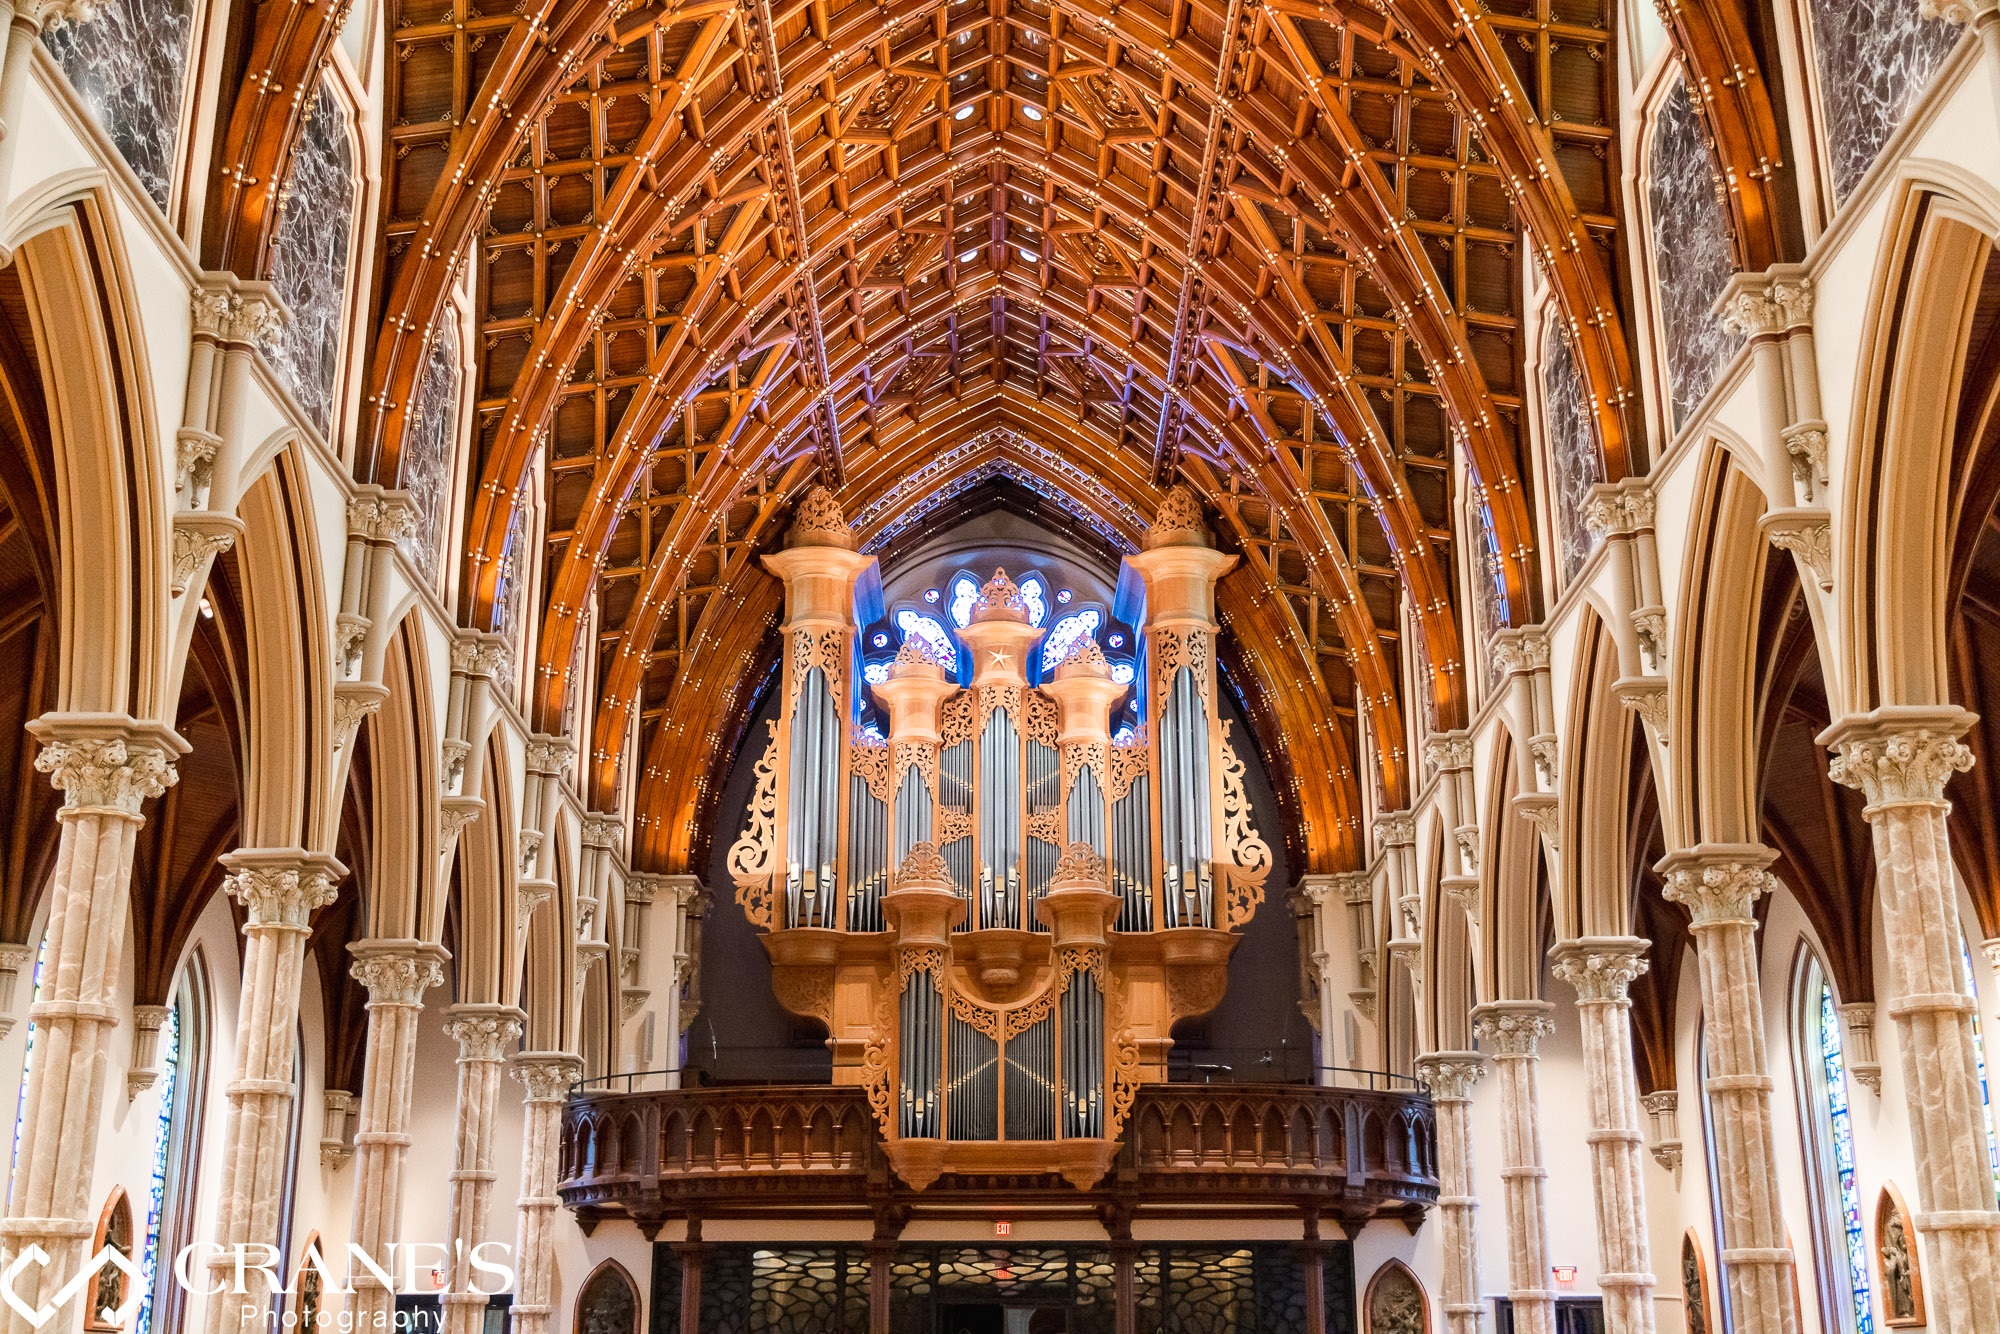 The organ at Holy Name Cathedral